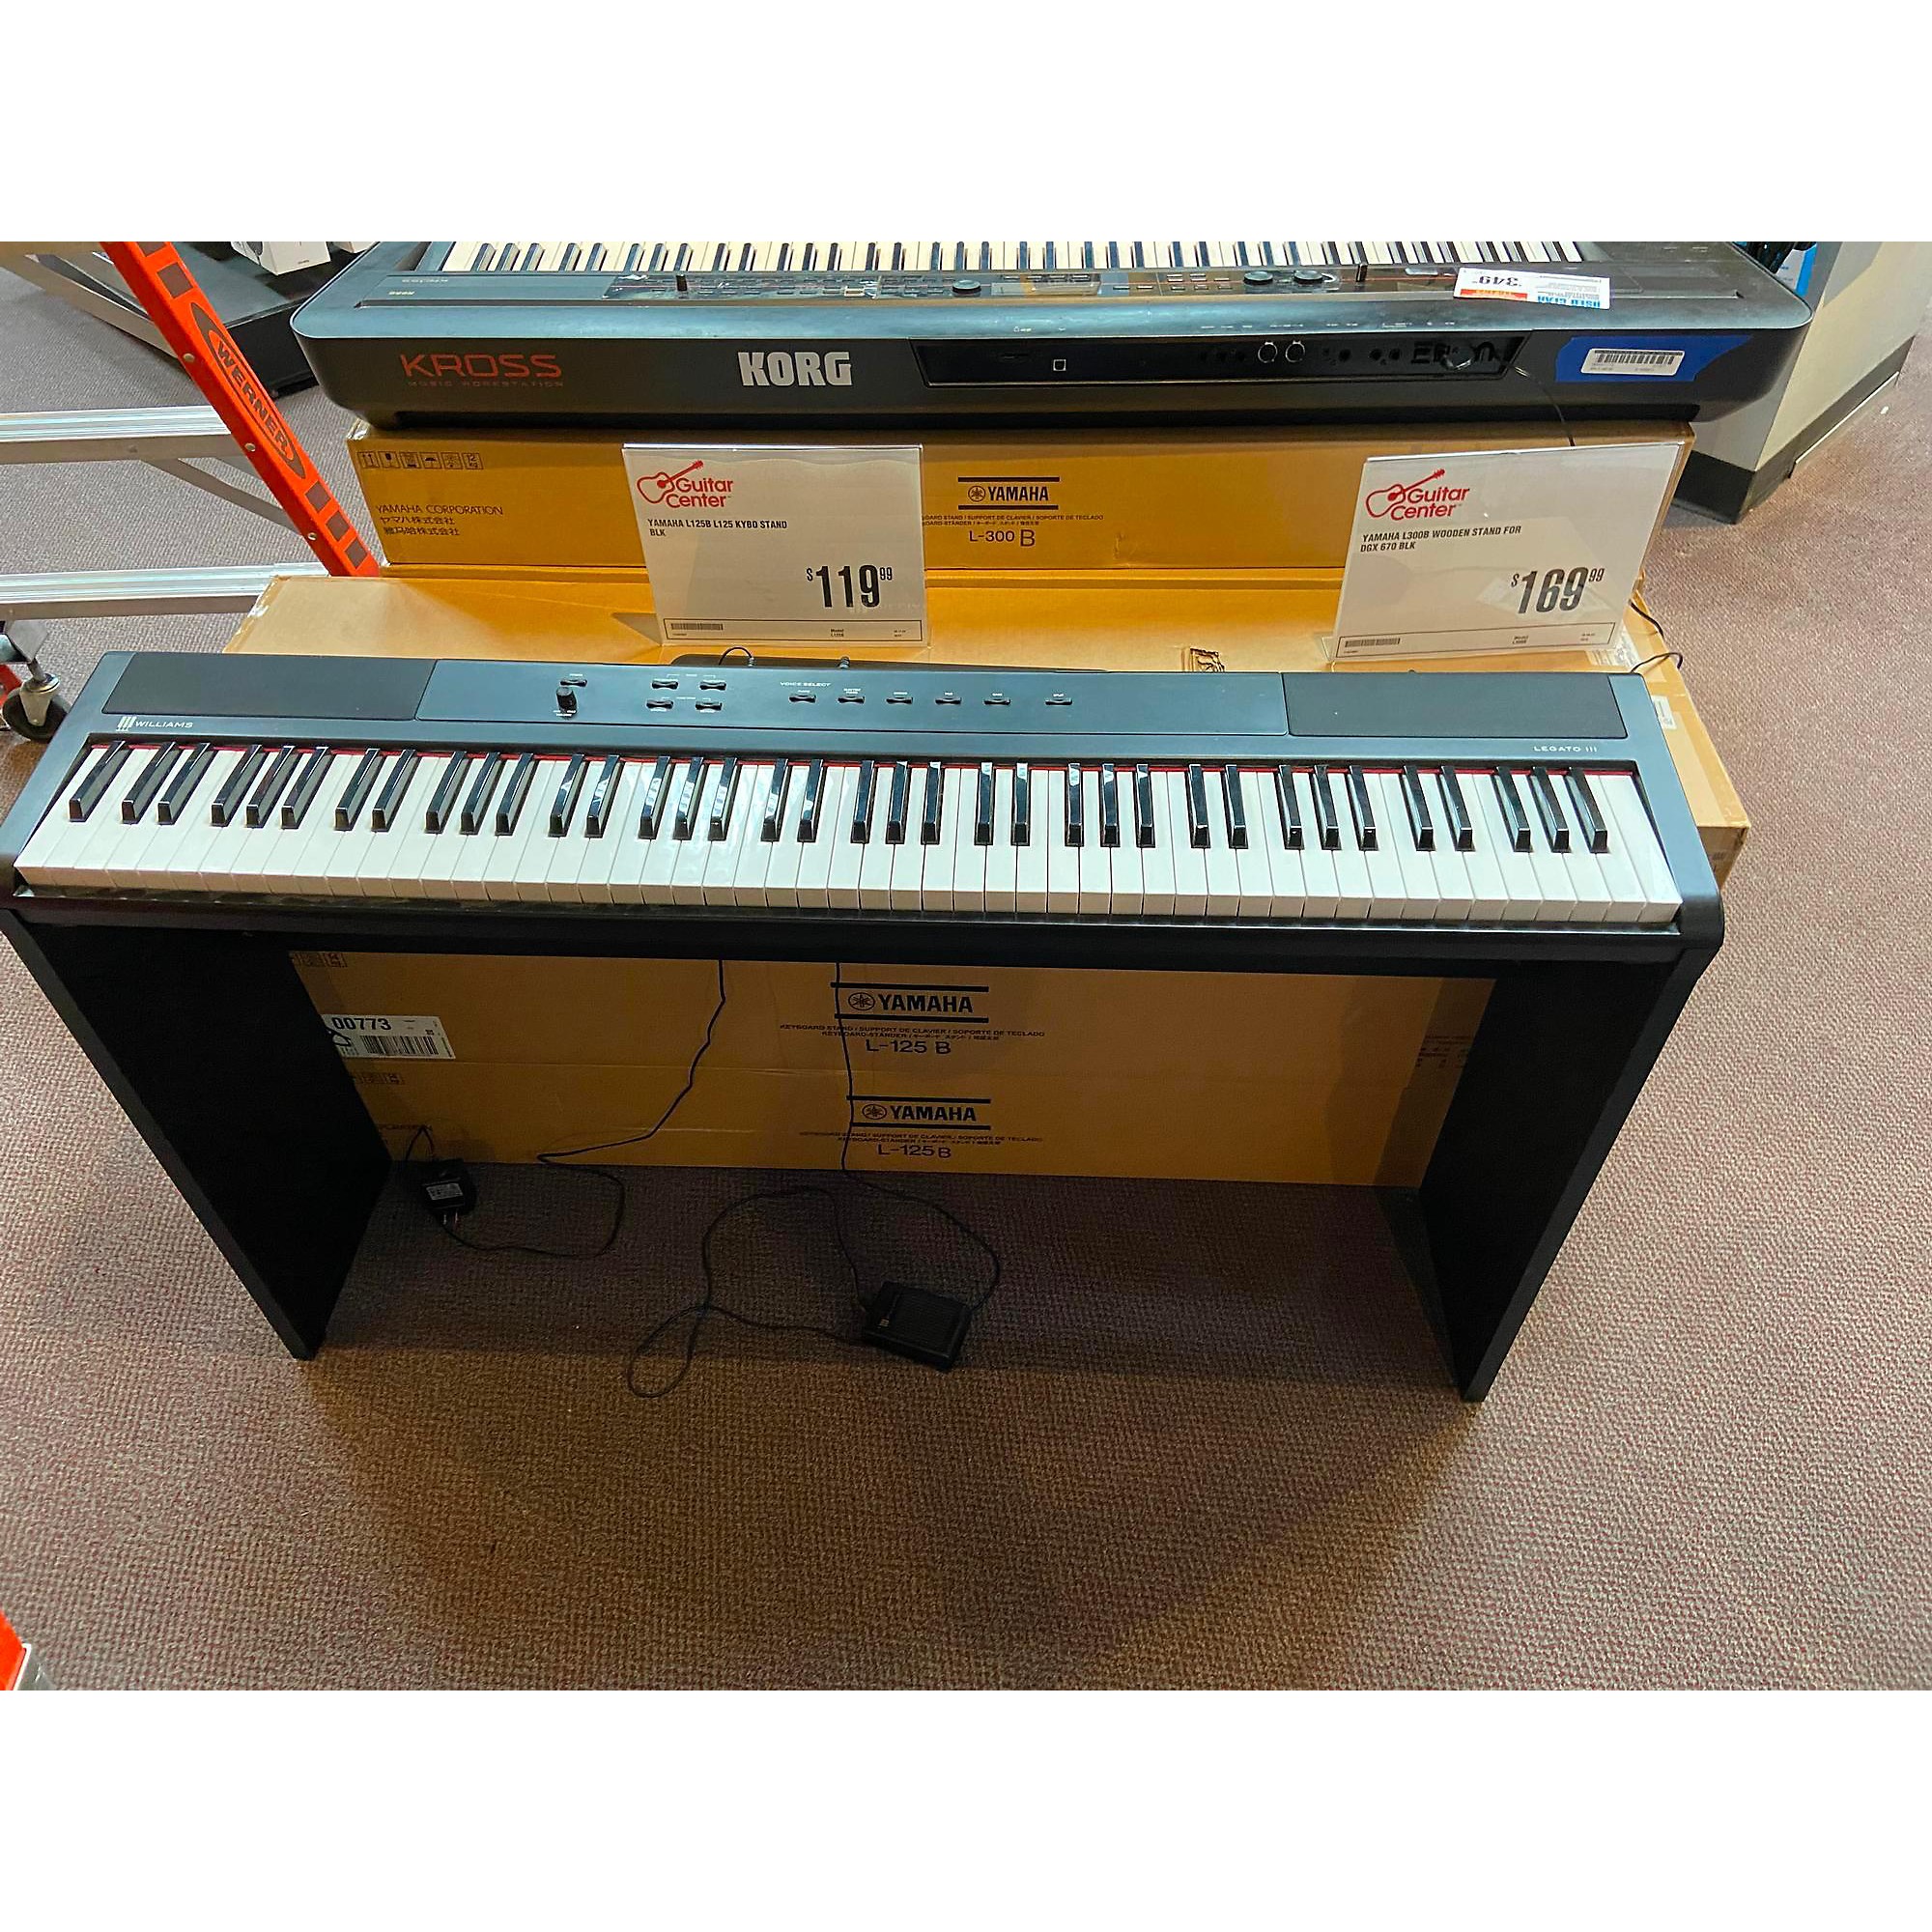 Soporte para Piano Digital Yamaha L-300 BlackMusic Market